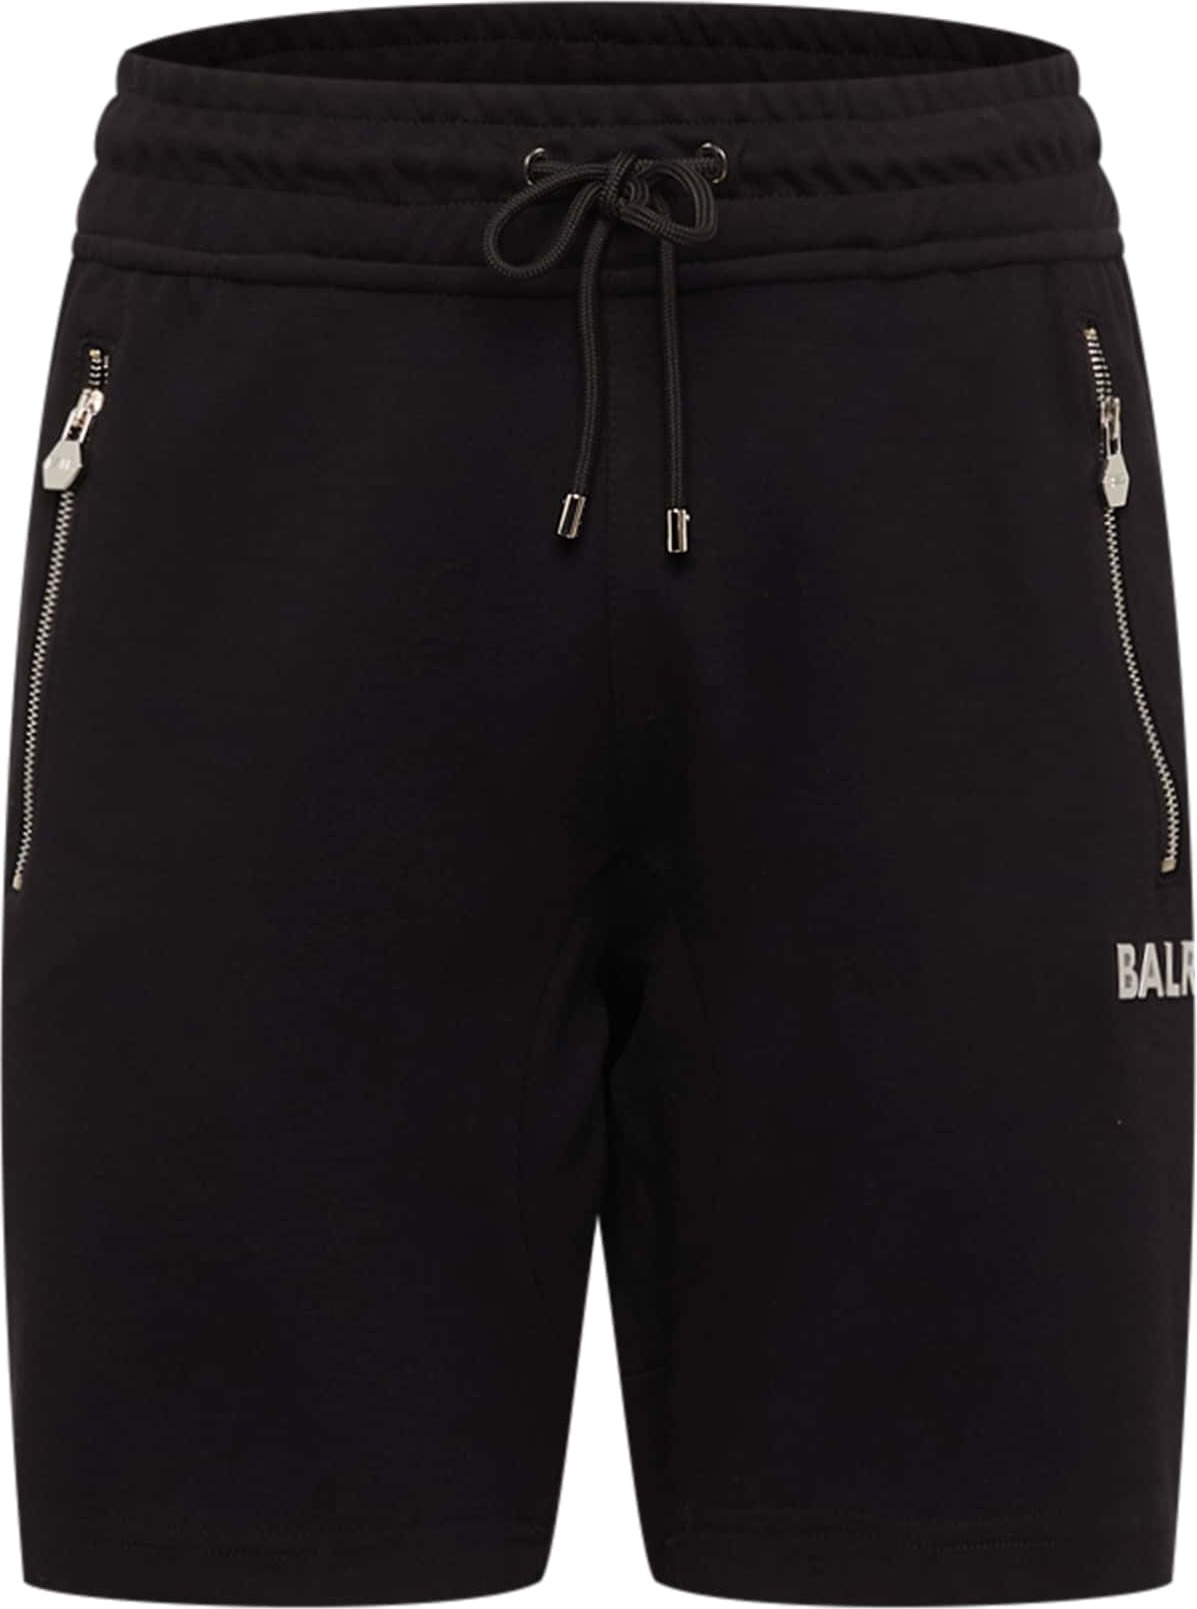 Kalhoty BALR. černá / stříbrná